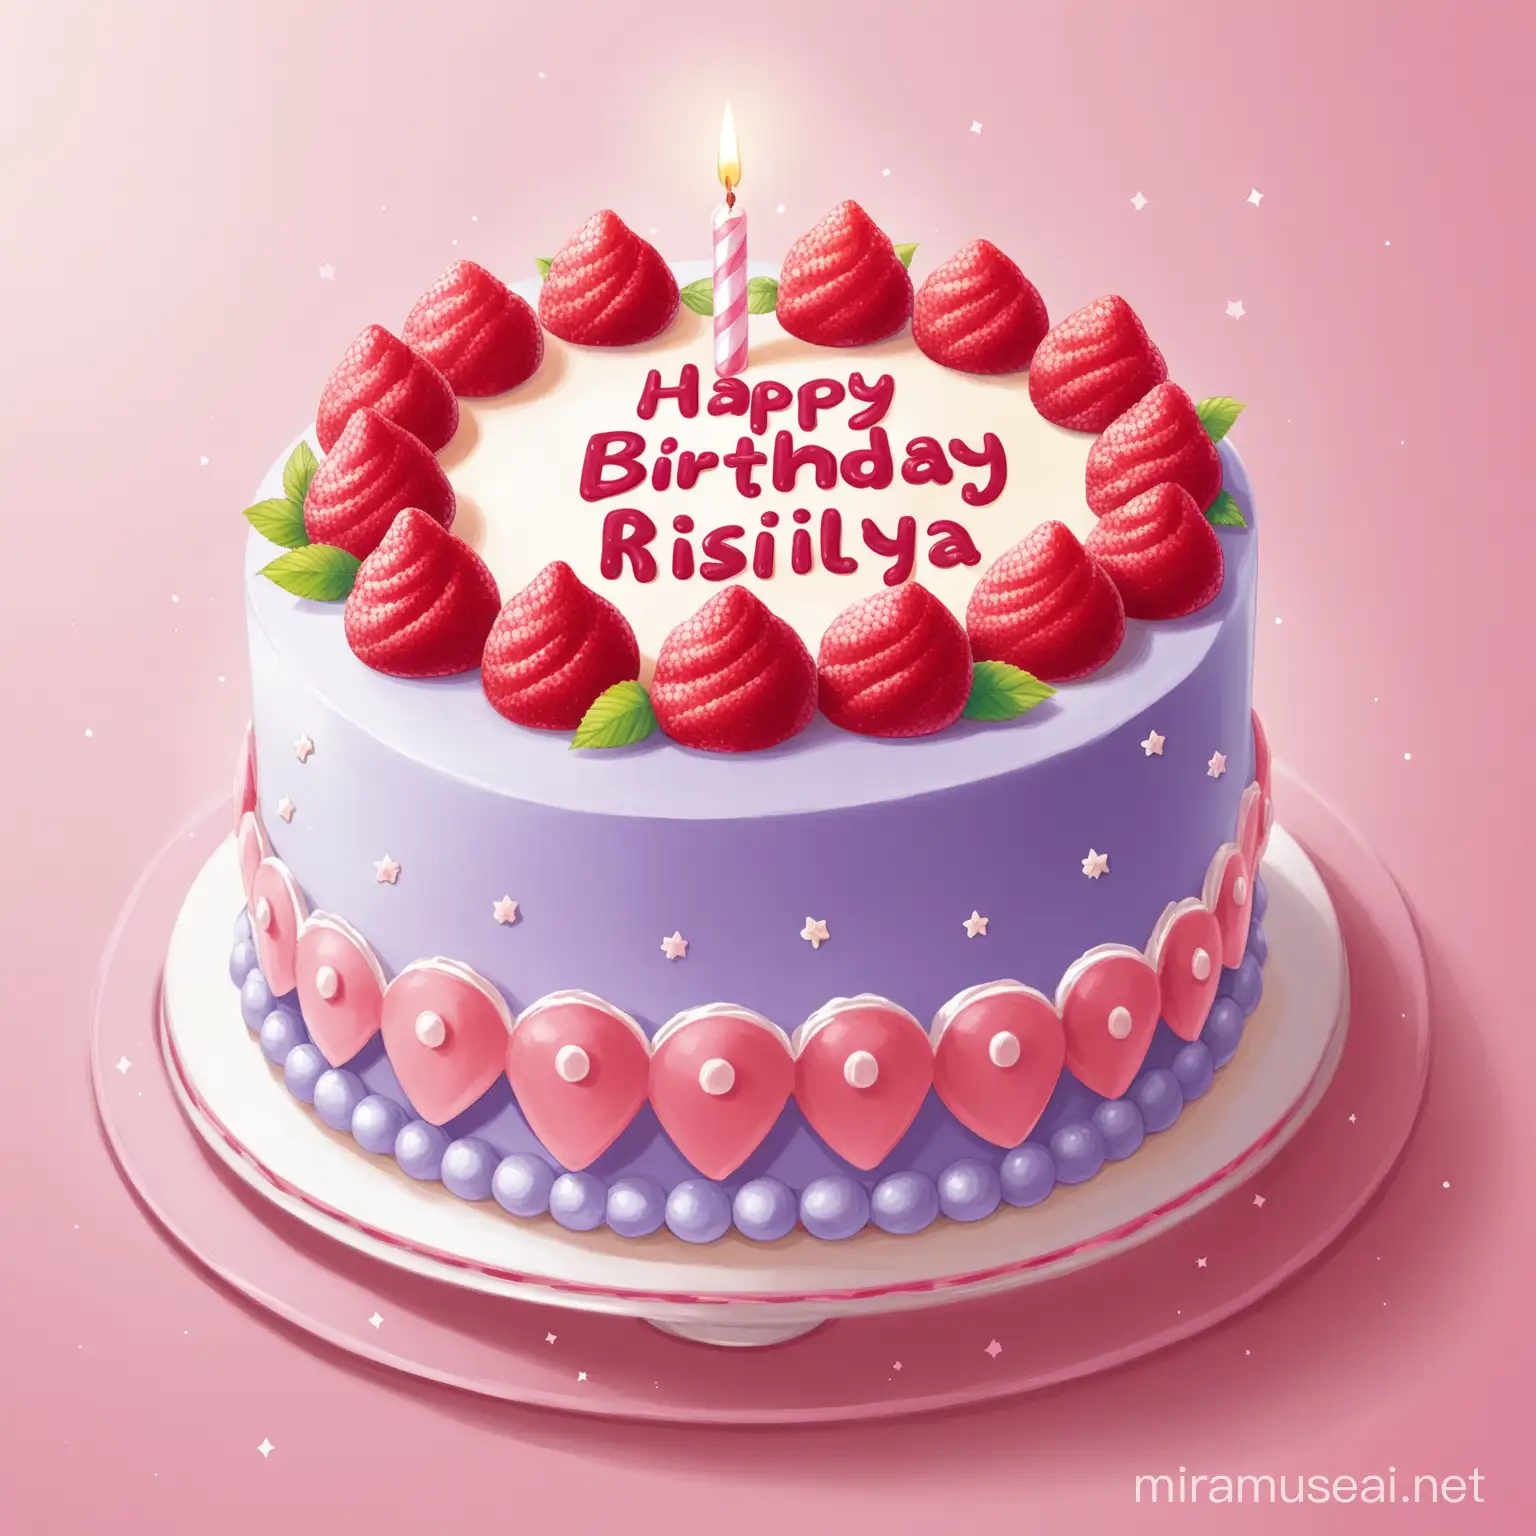 A cake written Happy birthday RISLIYA